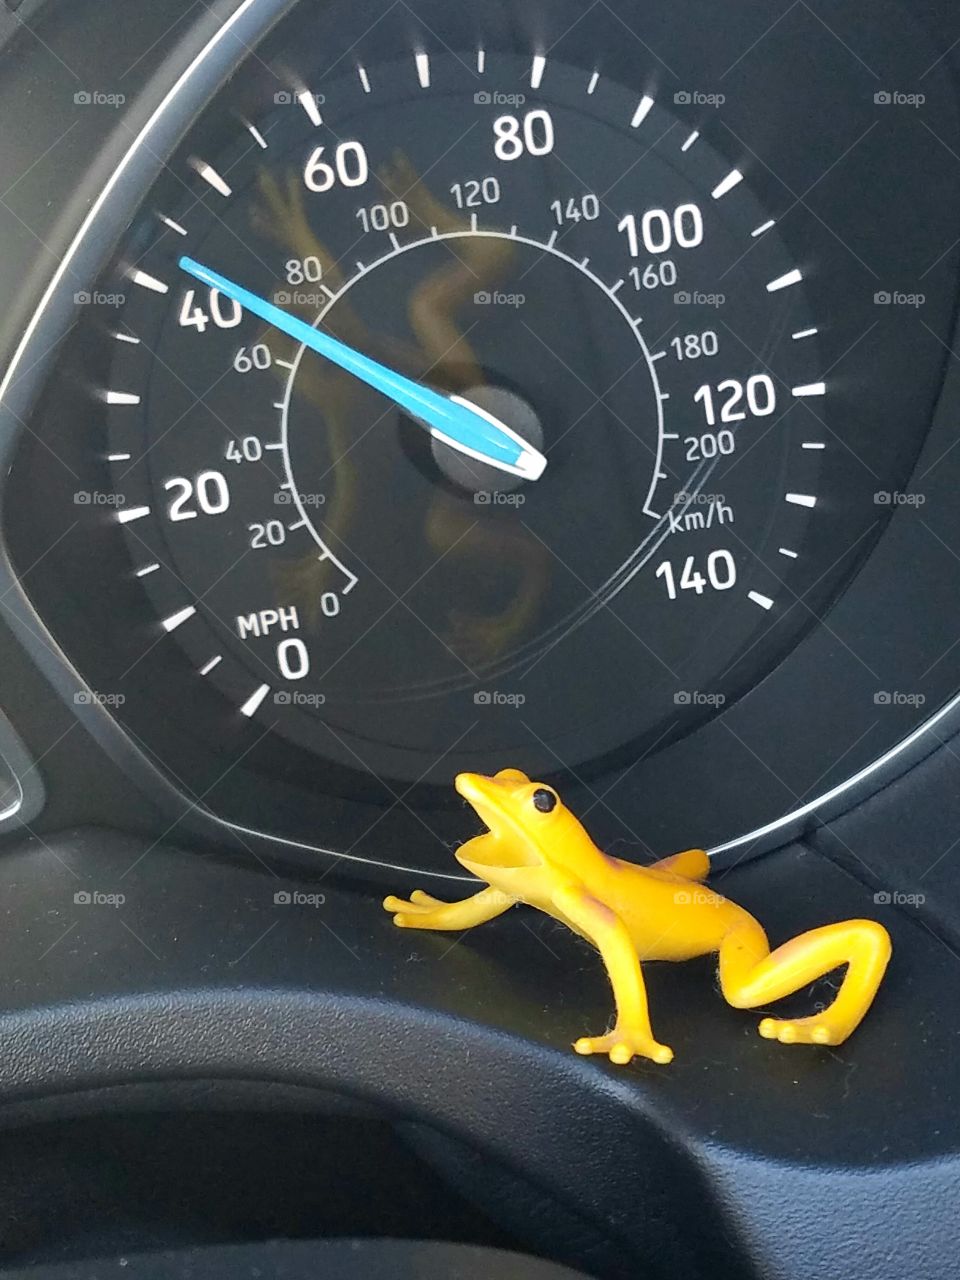 Speeding frog